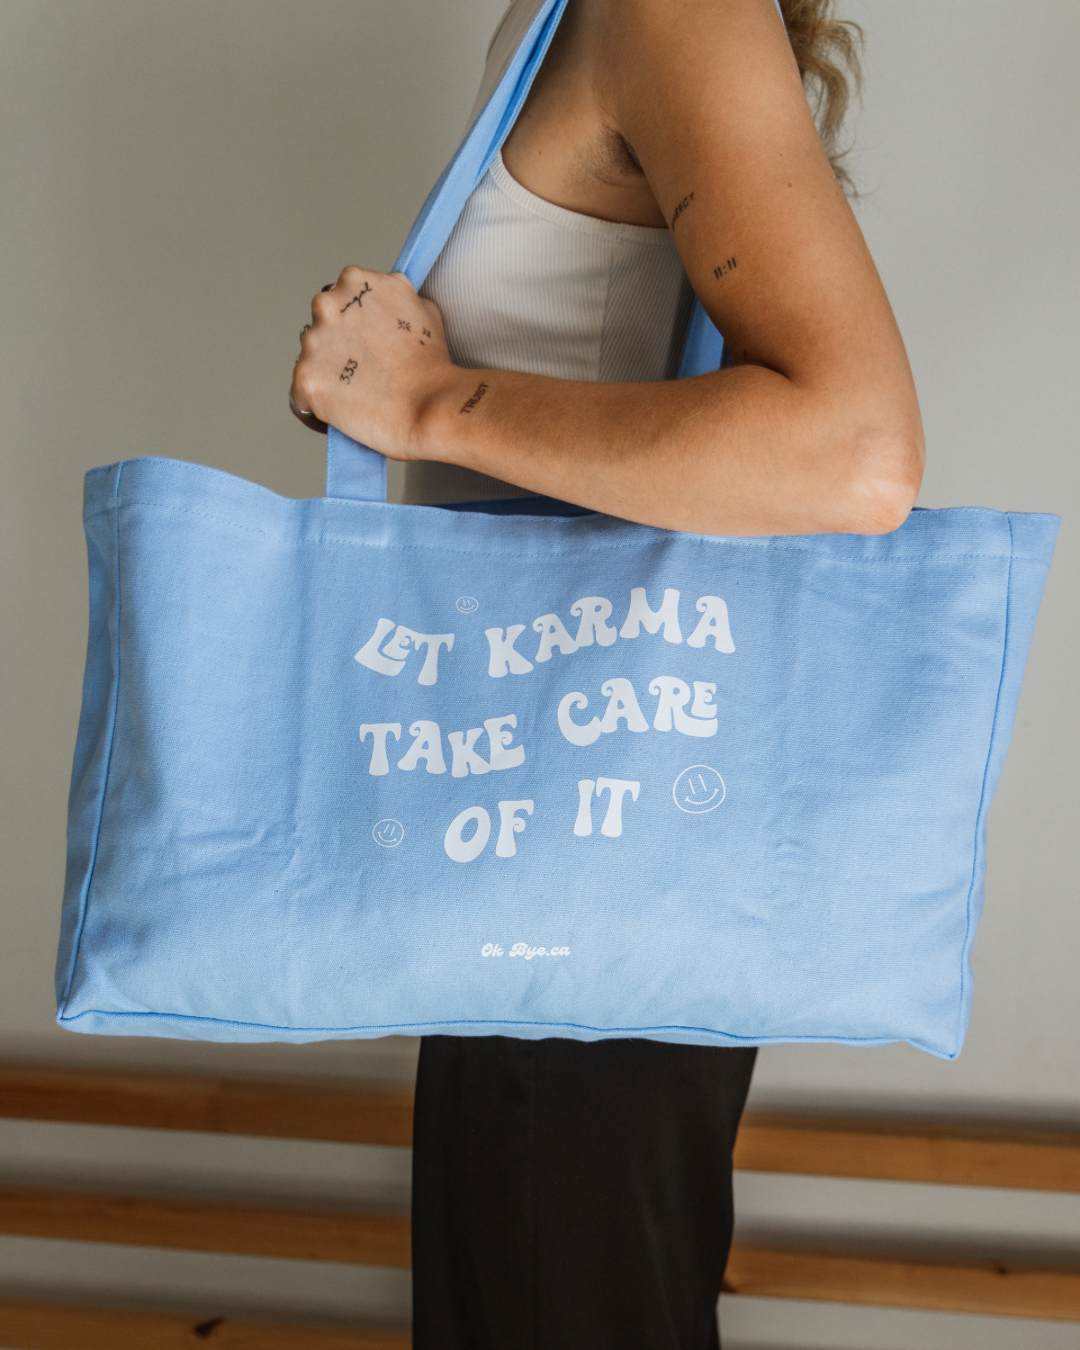 Let karma take care of it - Tote Bag